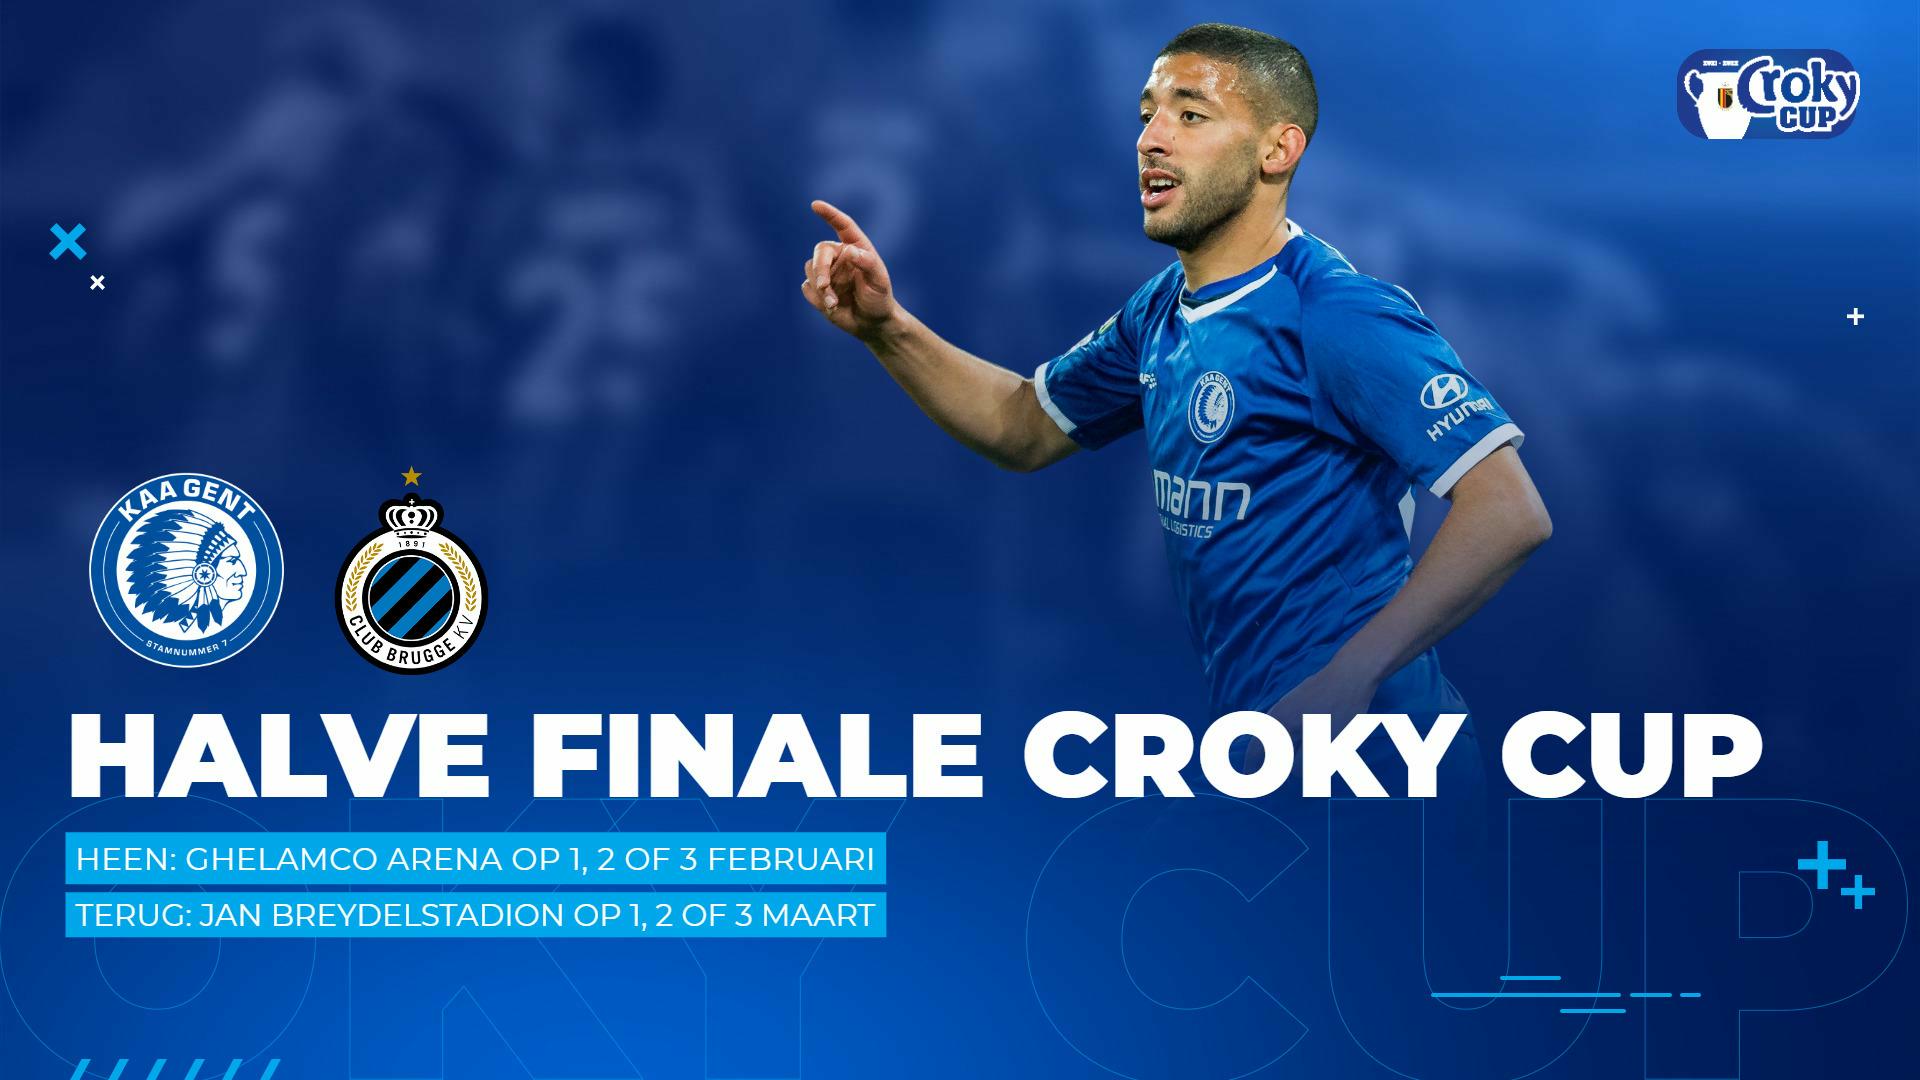 cricket Cottage Less Gent loot Club Brugge in halve finales Croky Cup | KAA Gent Website